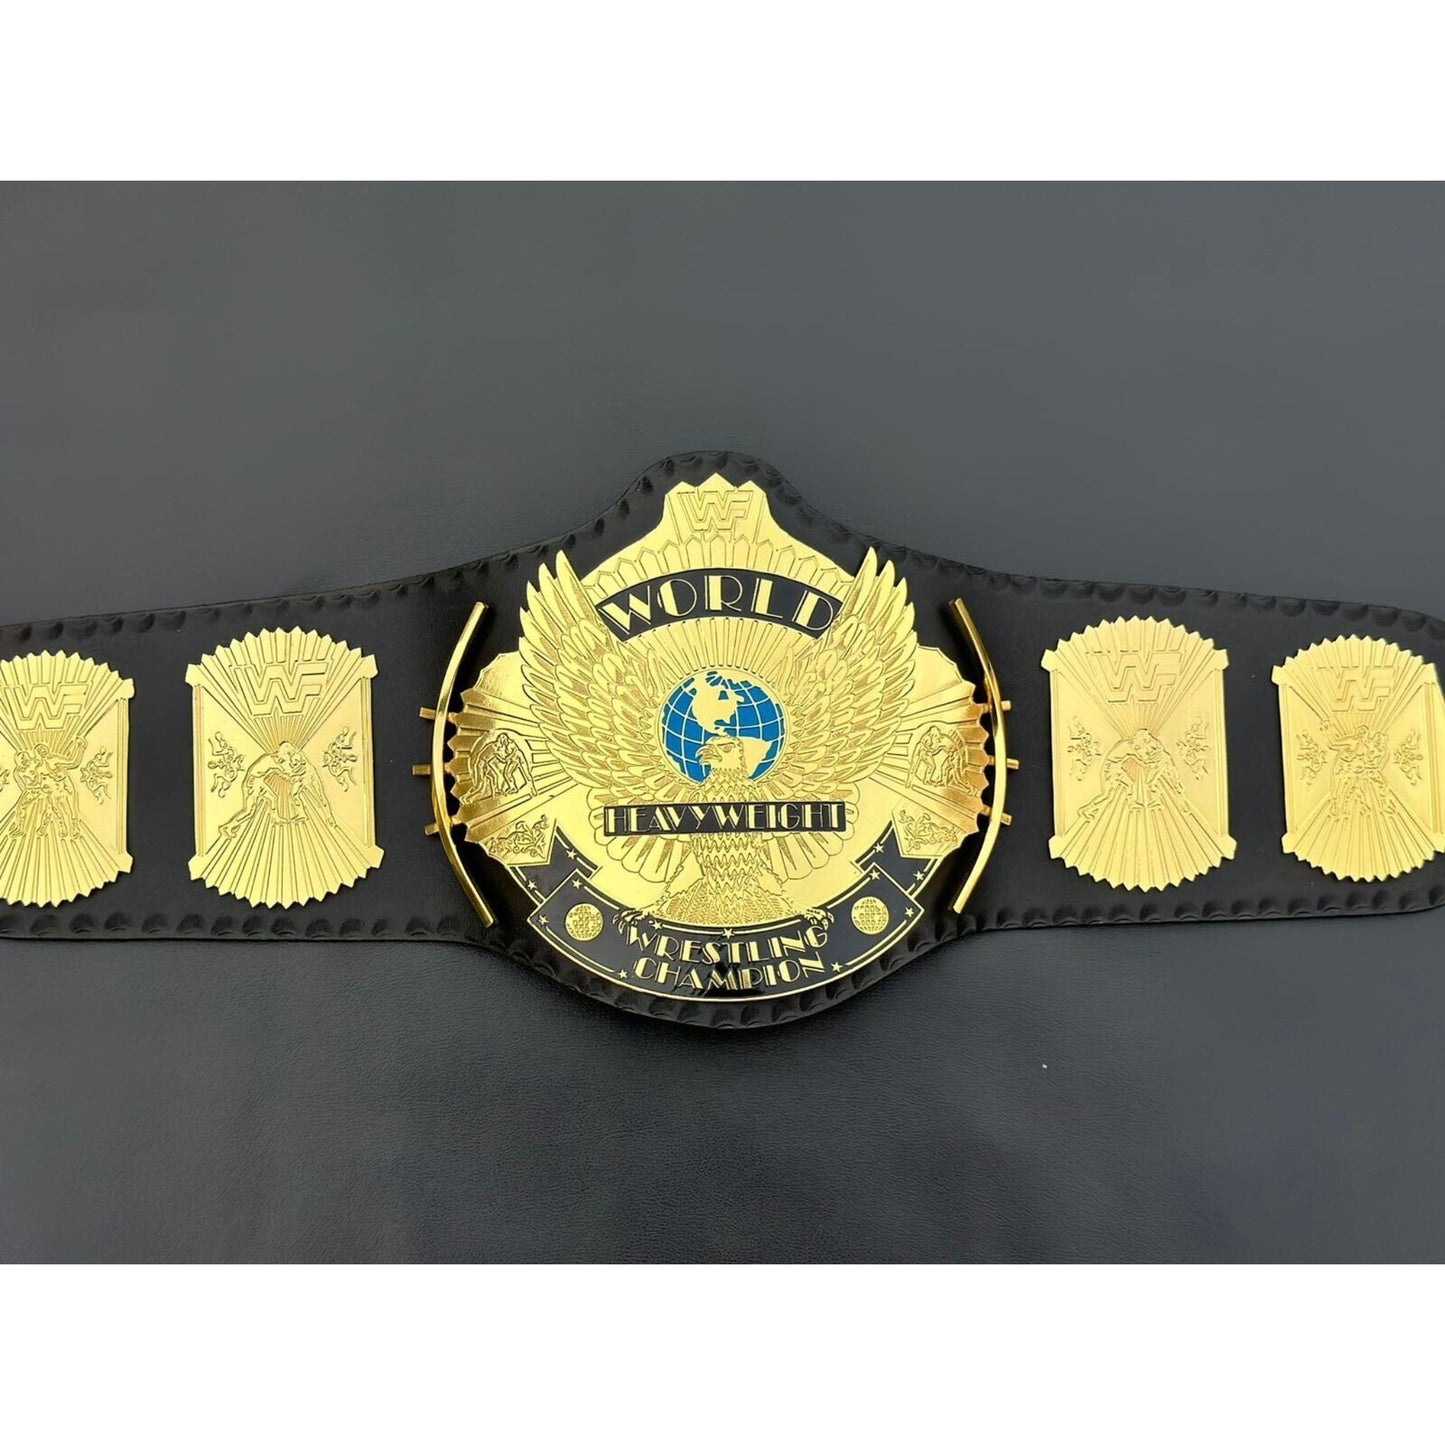 WWF Championship Belt